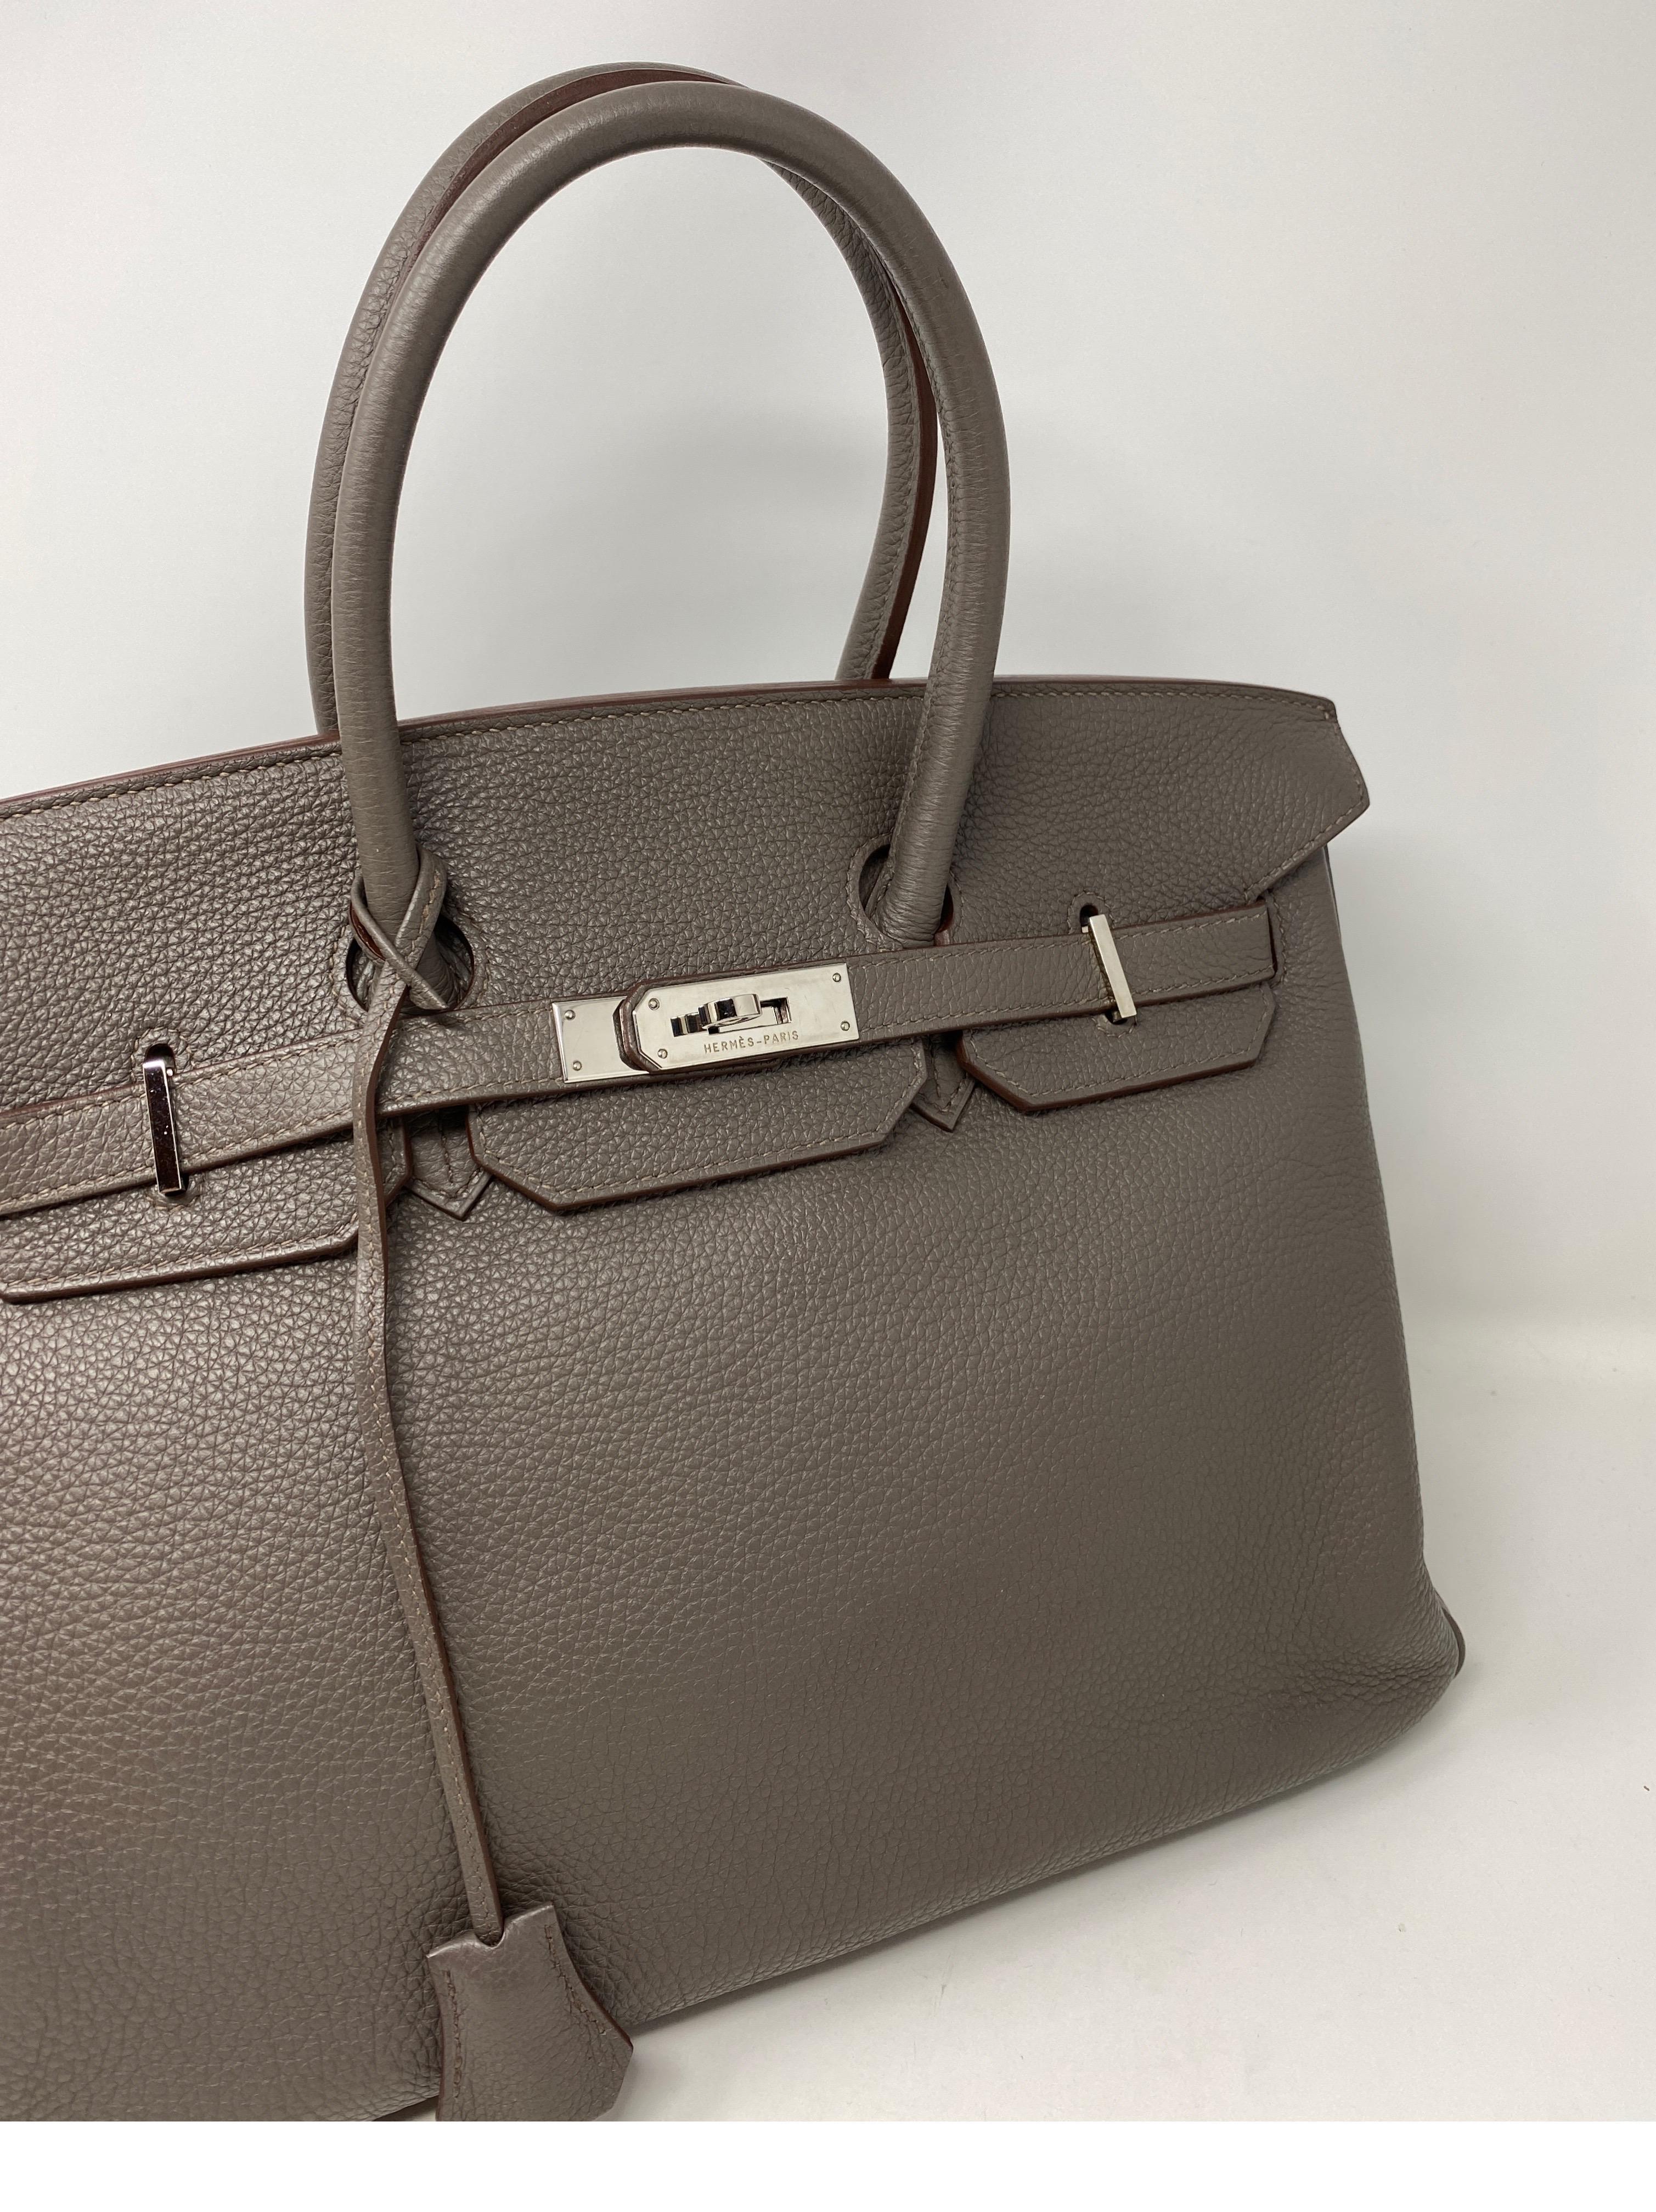 Hermes Birkin 35 Etain Togo Leather Bag  6